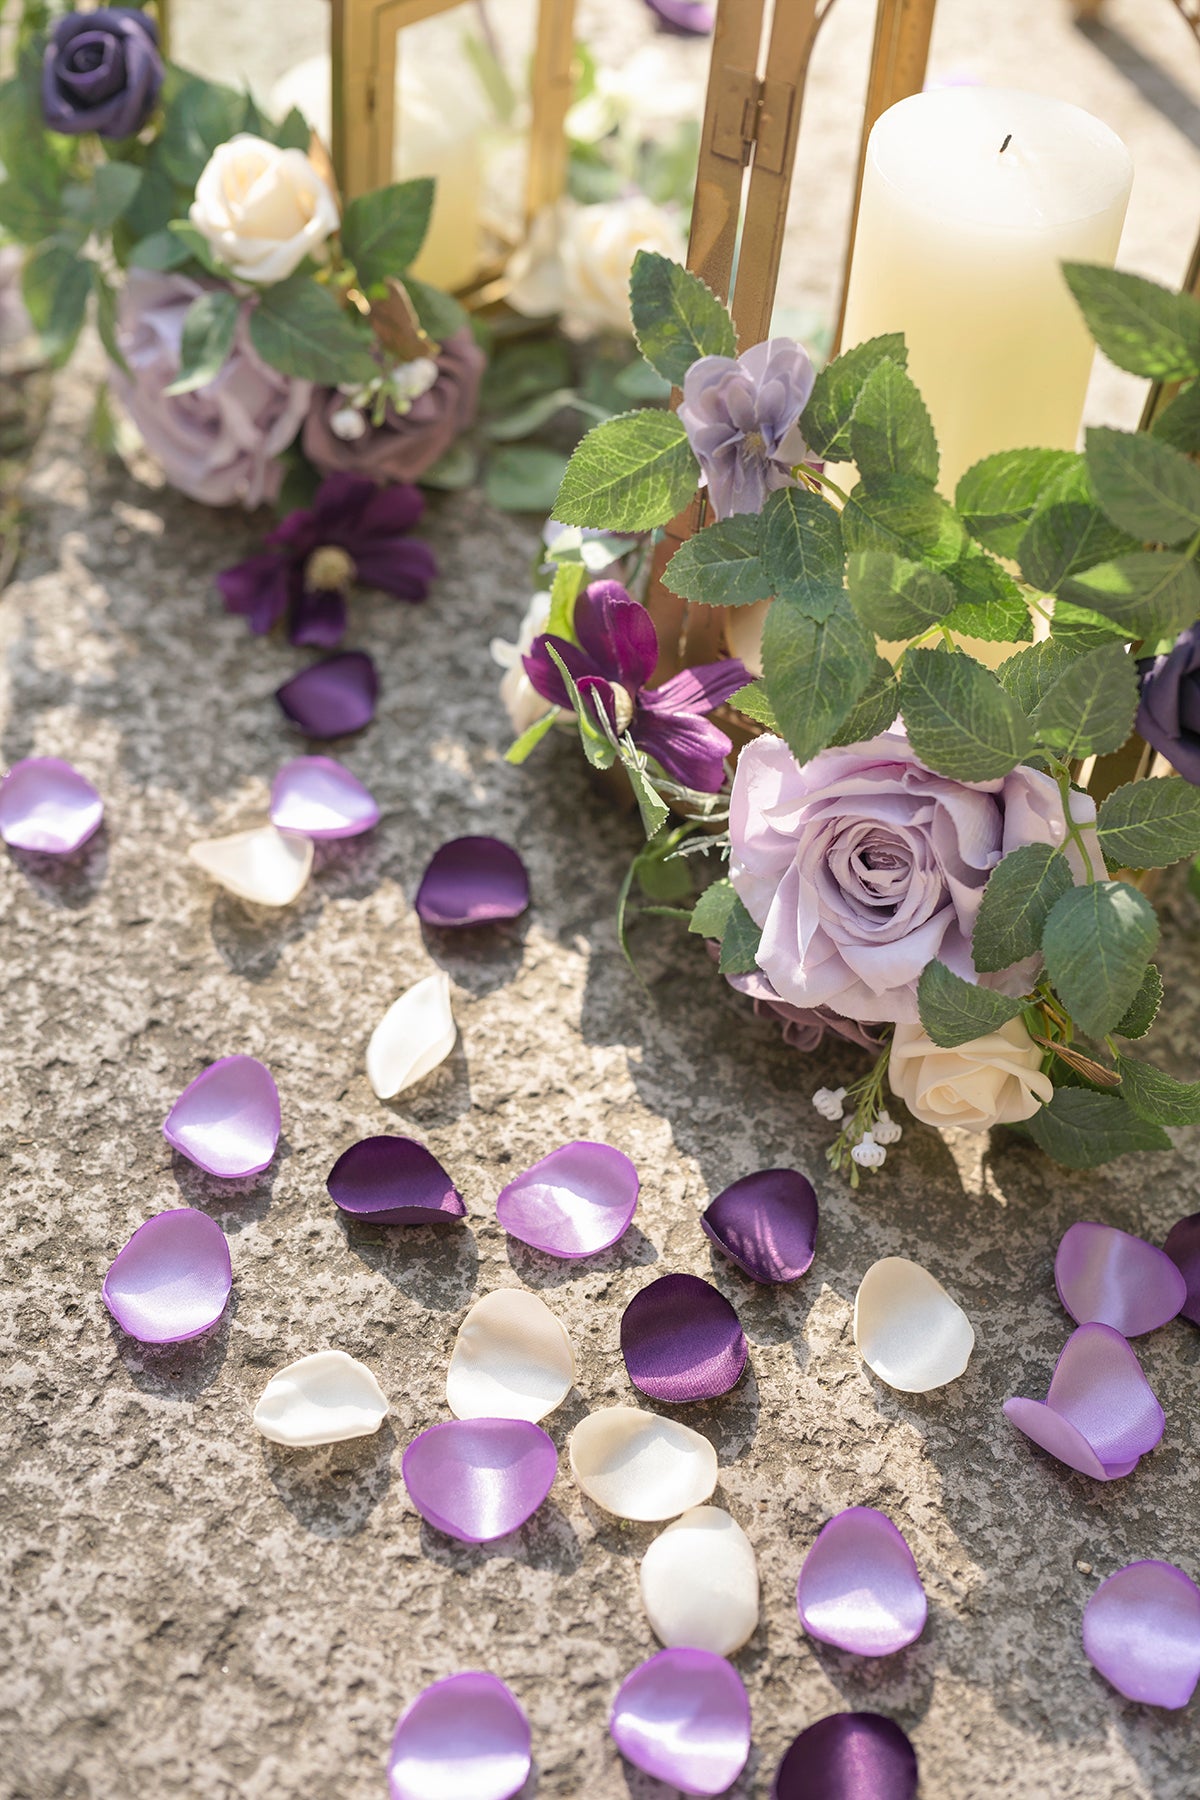 1,000 Silk Rose Petals - Red / Black / Ivory White / Pink / Royal Blue /  Purple in Las Vegas, NV